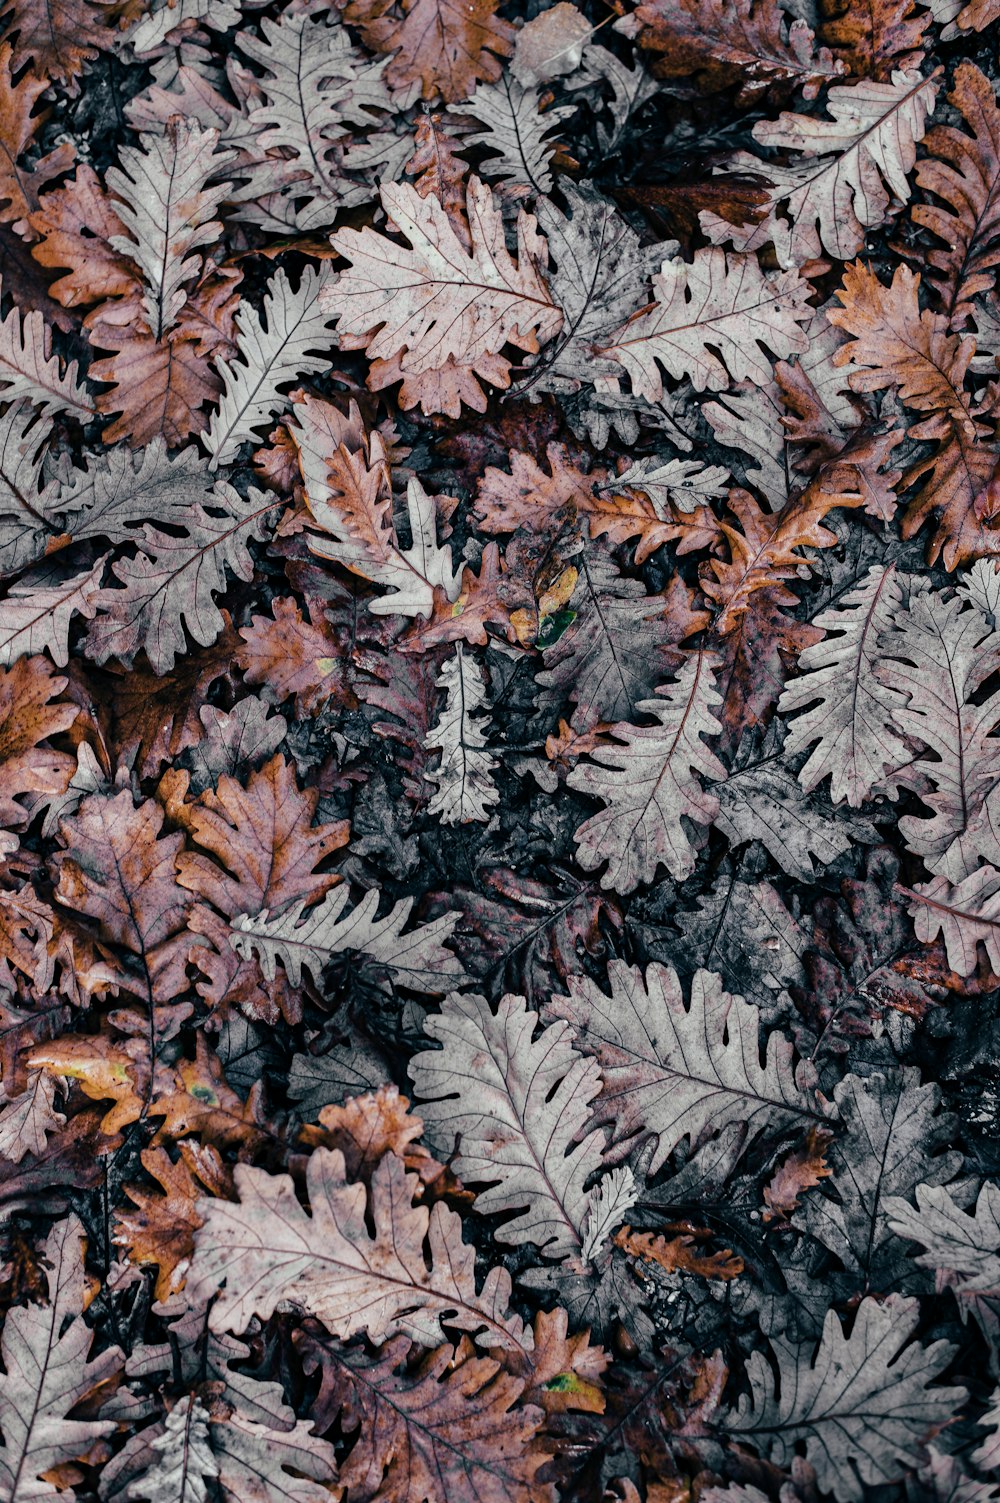 Selektives Fotografieren von getrockneten Blättern